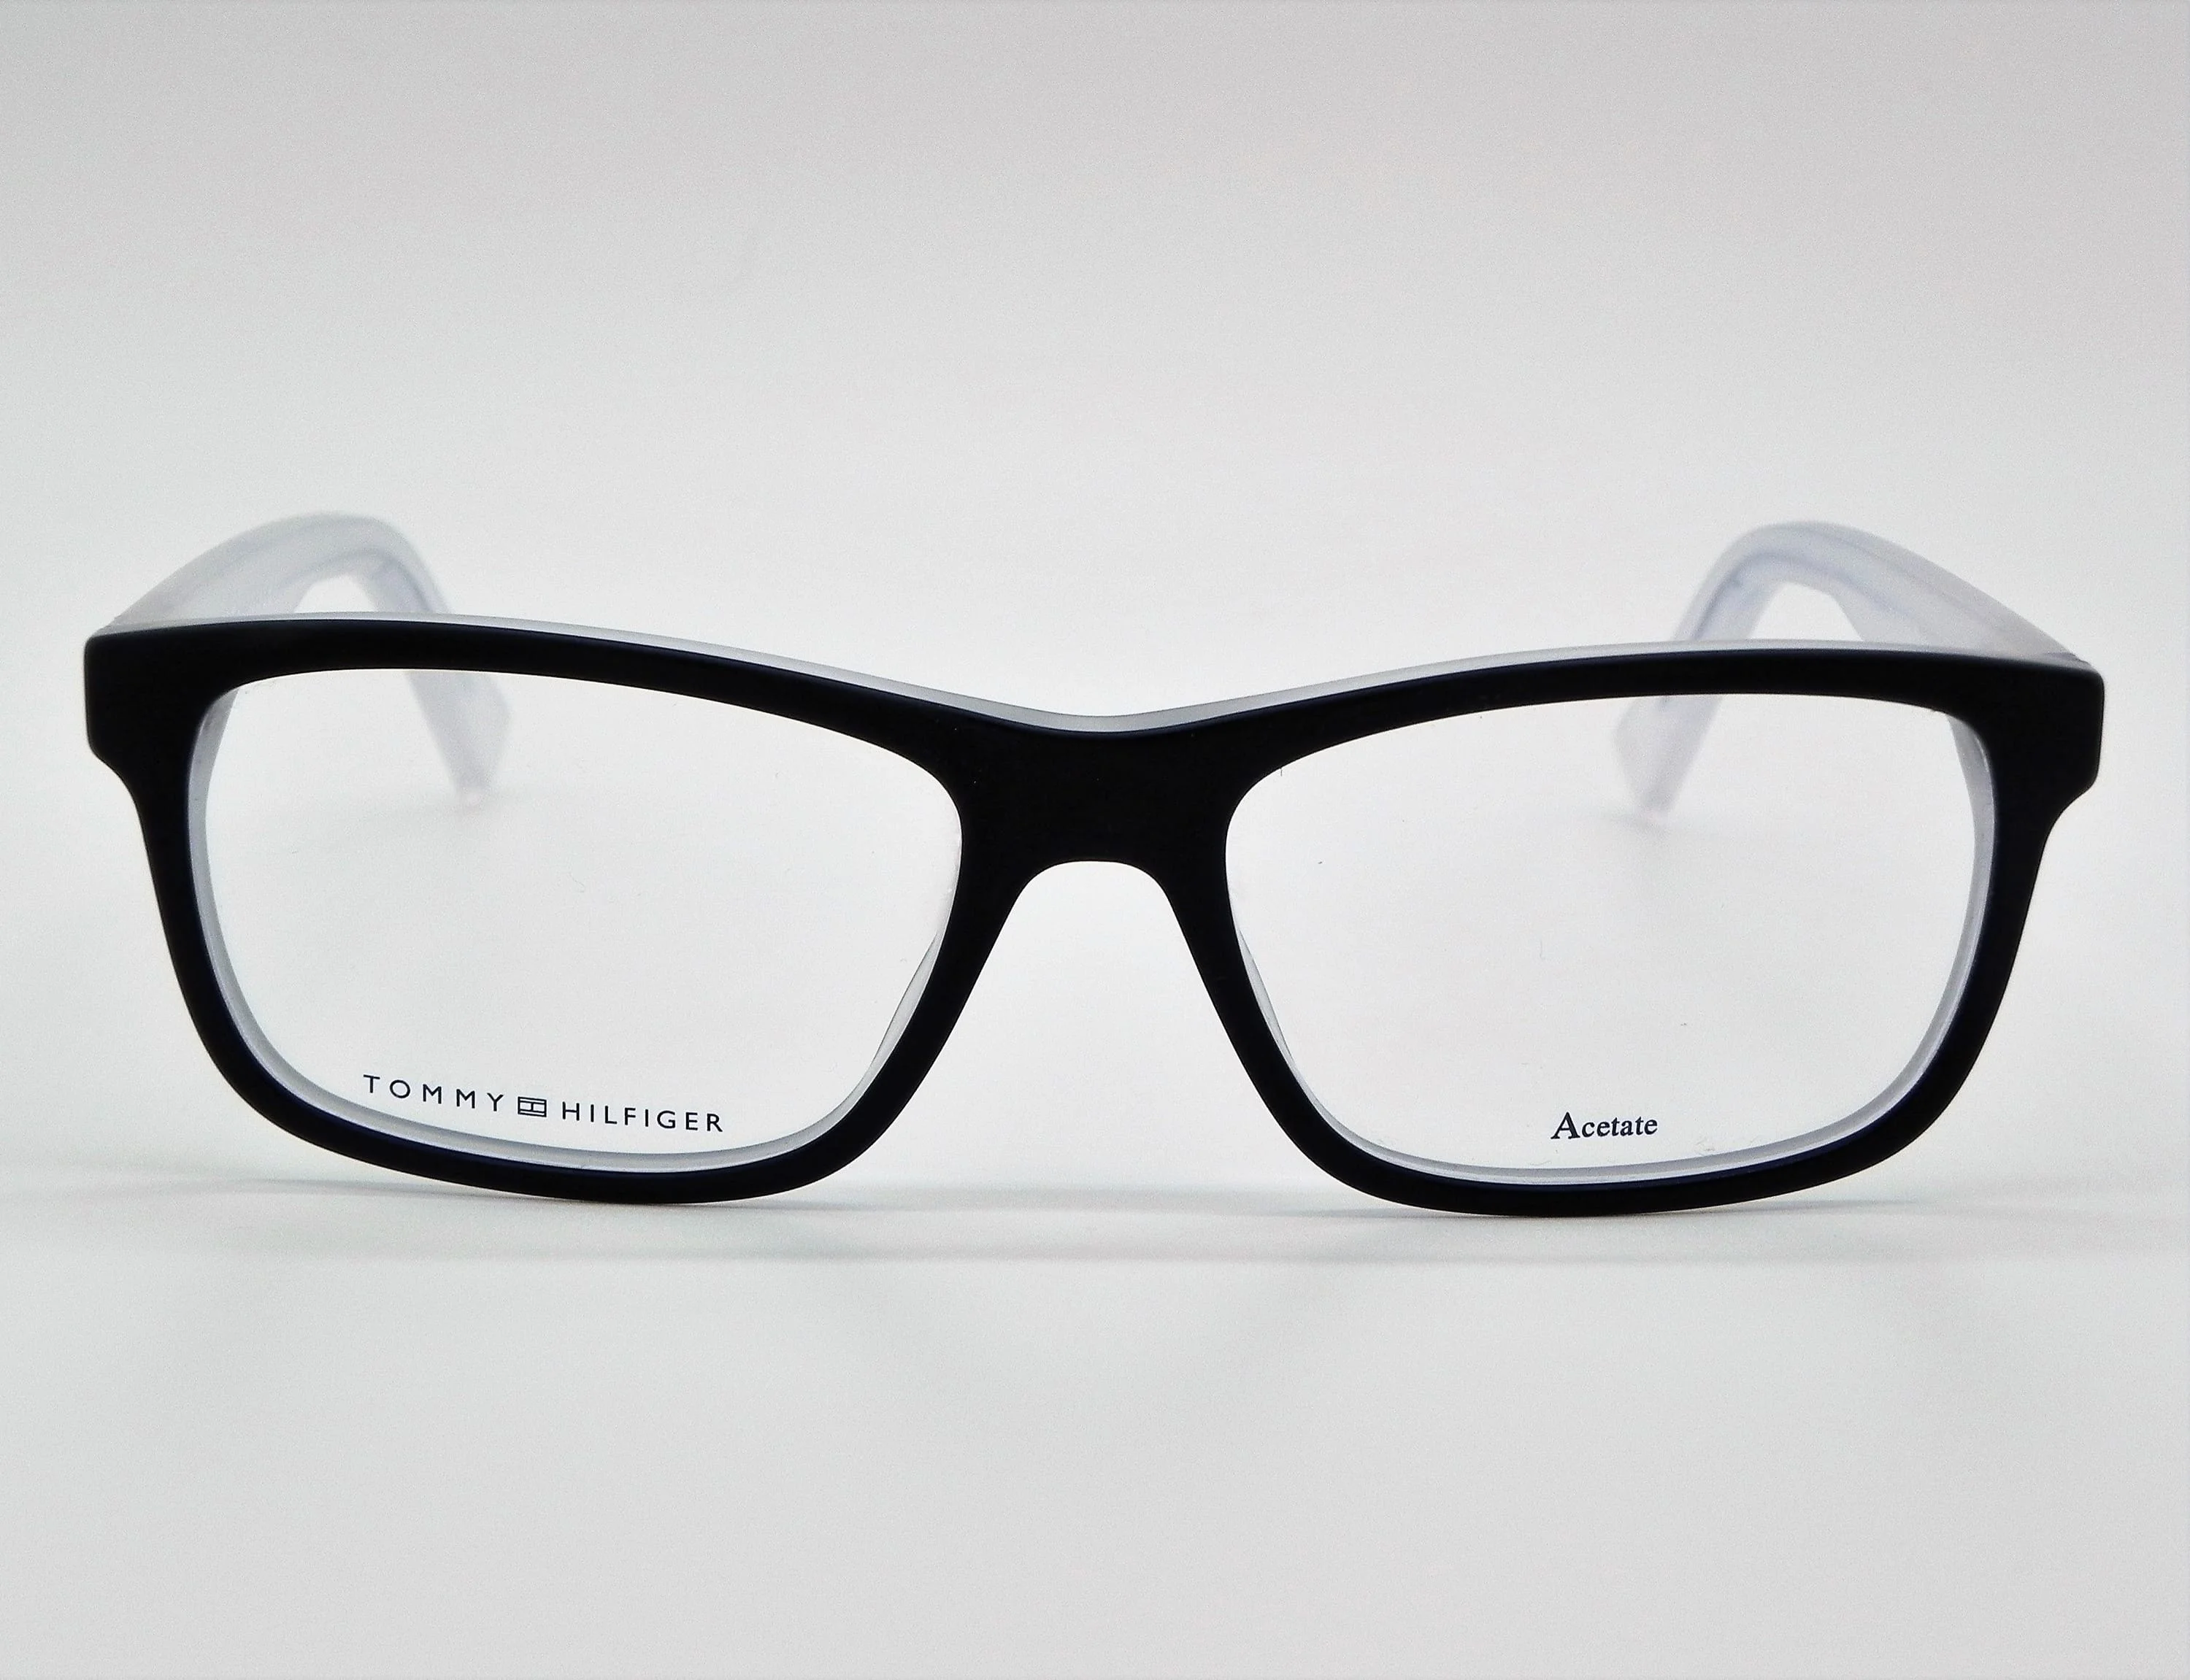 Tommy Hilfiger Glasses Monterey